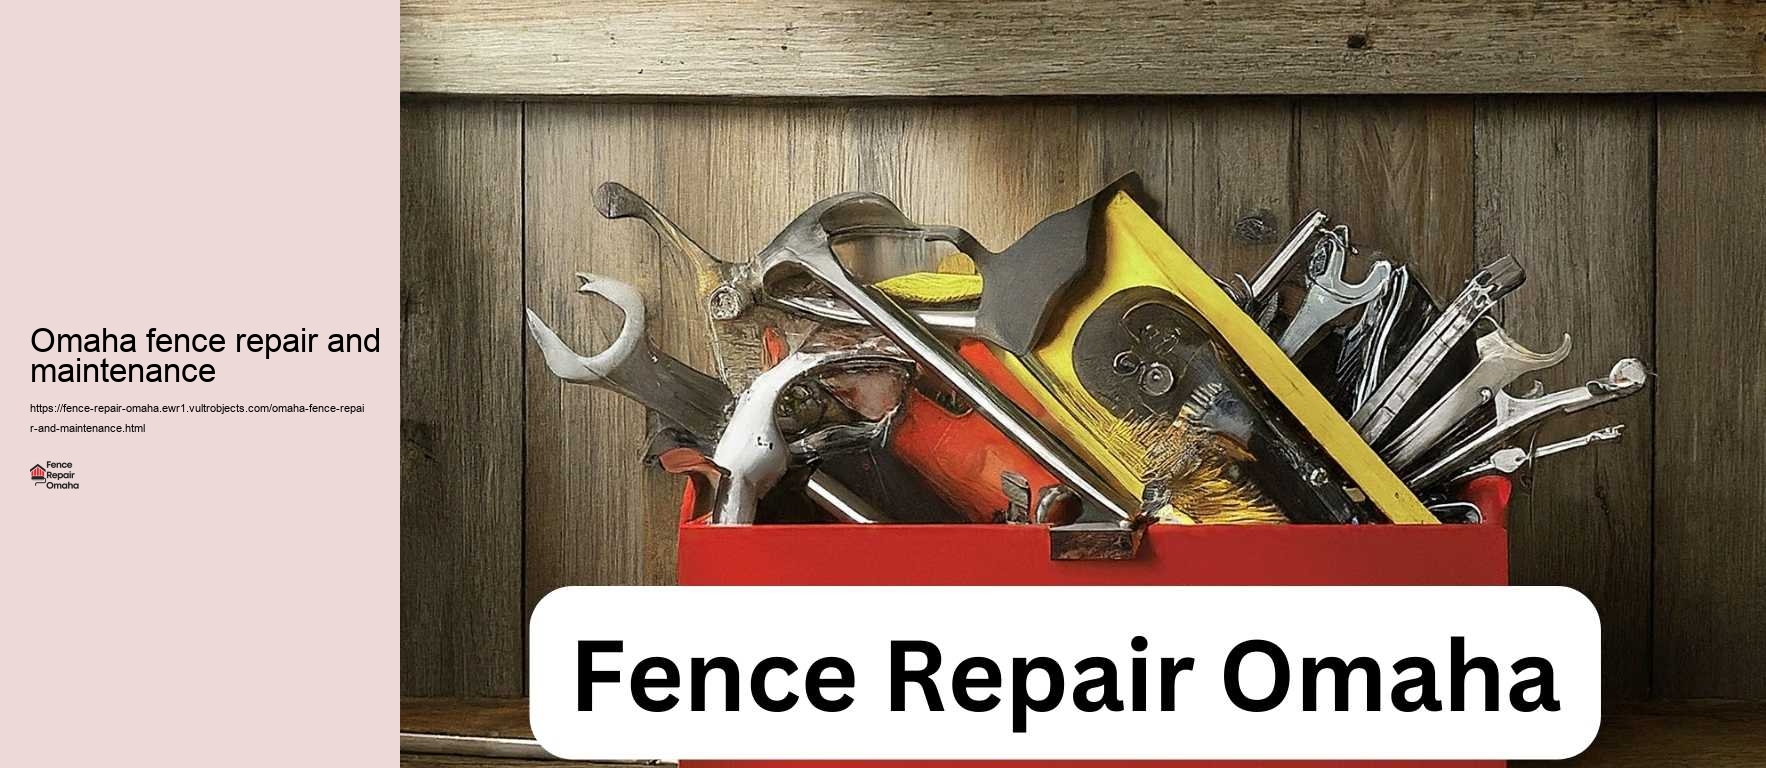 Omaha fence repair and maintenance